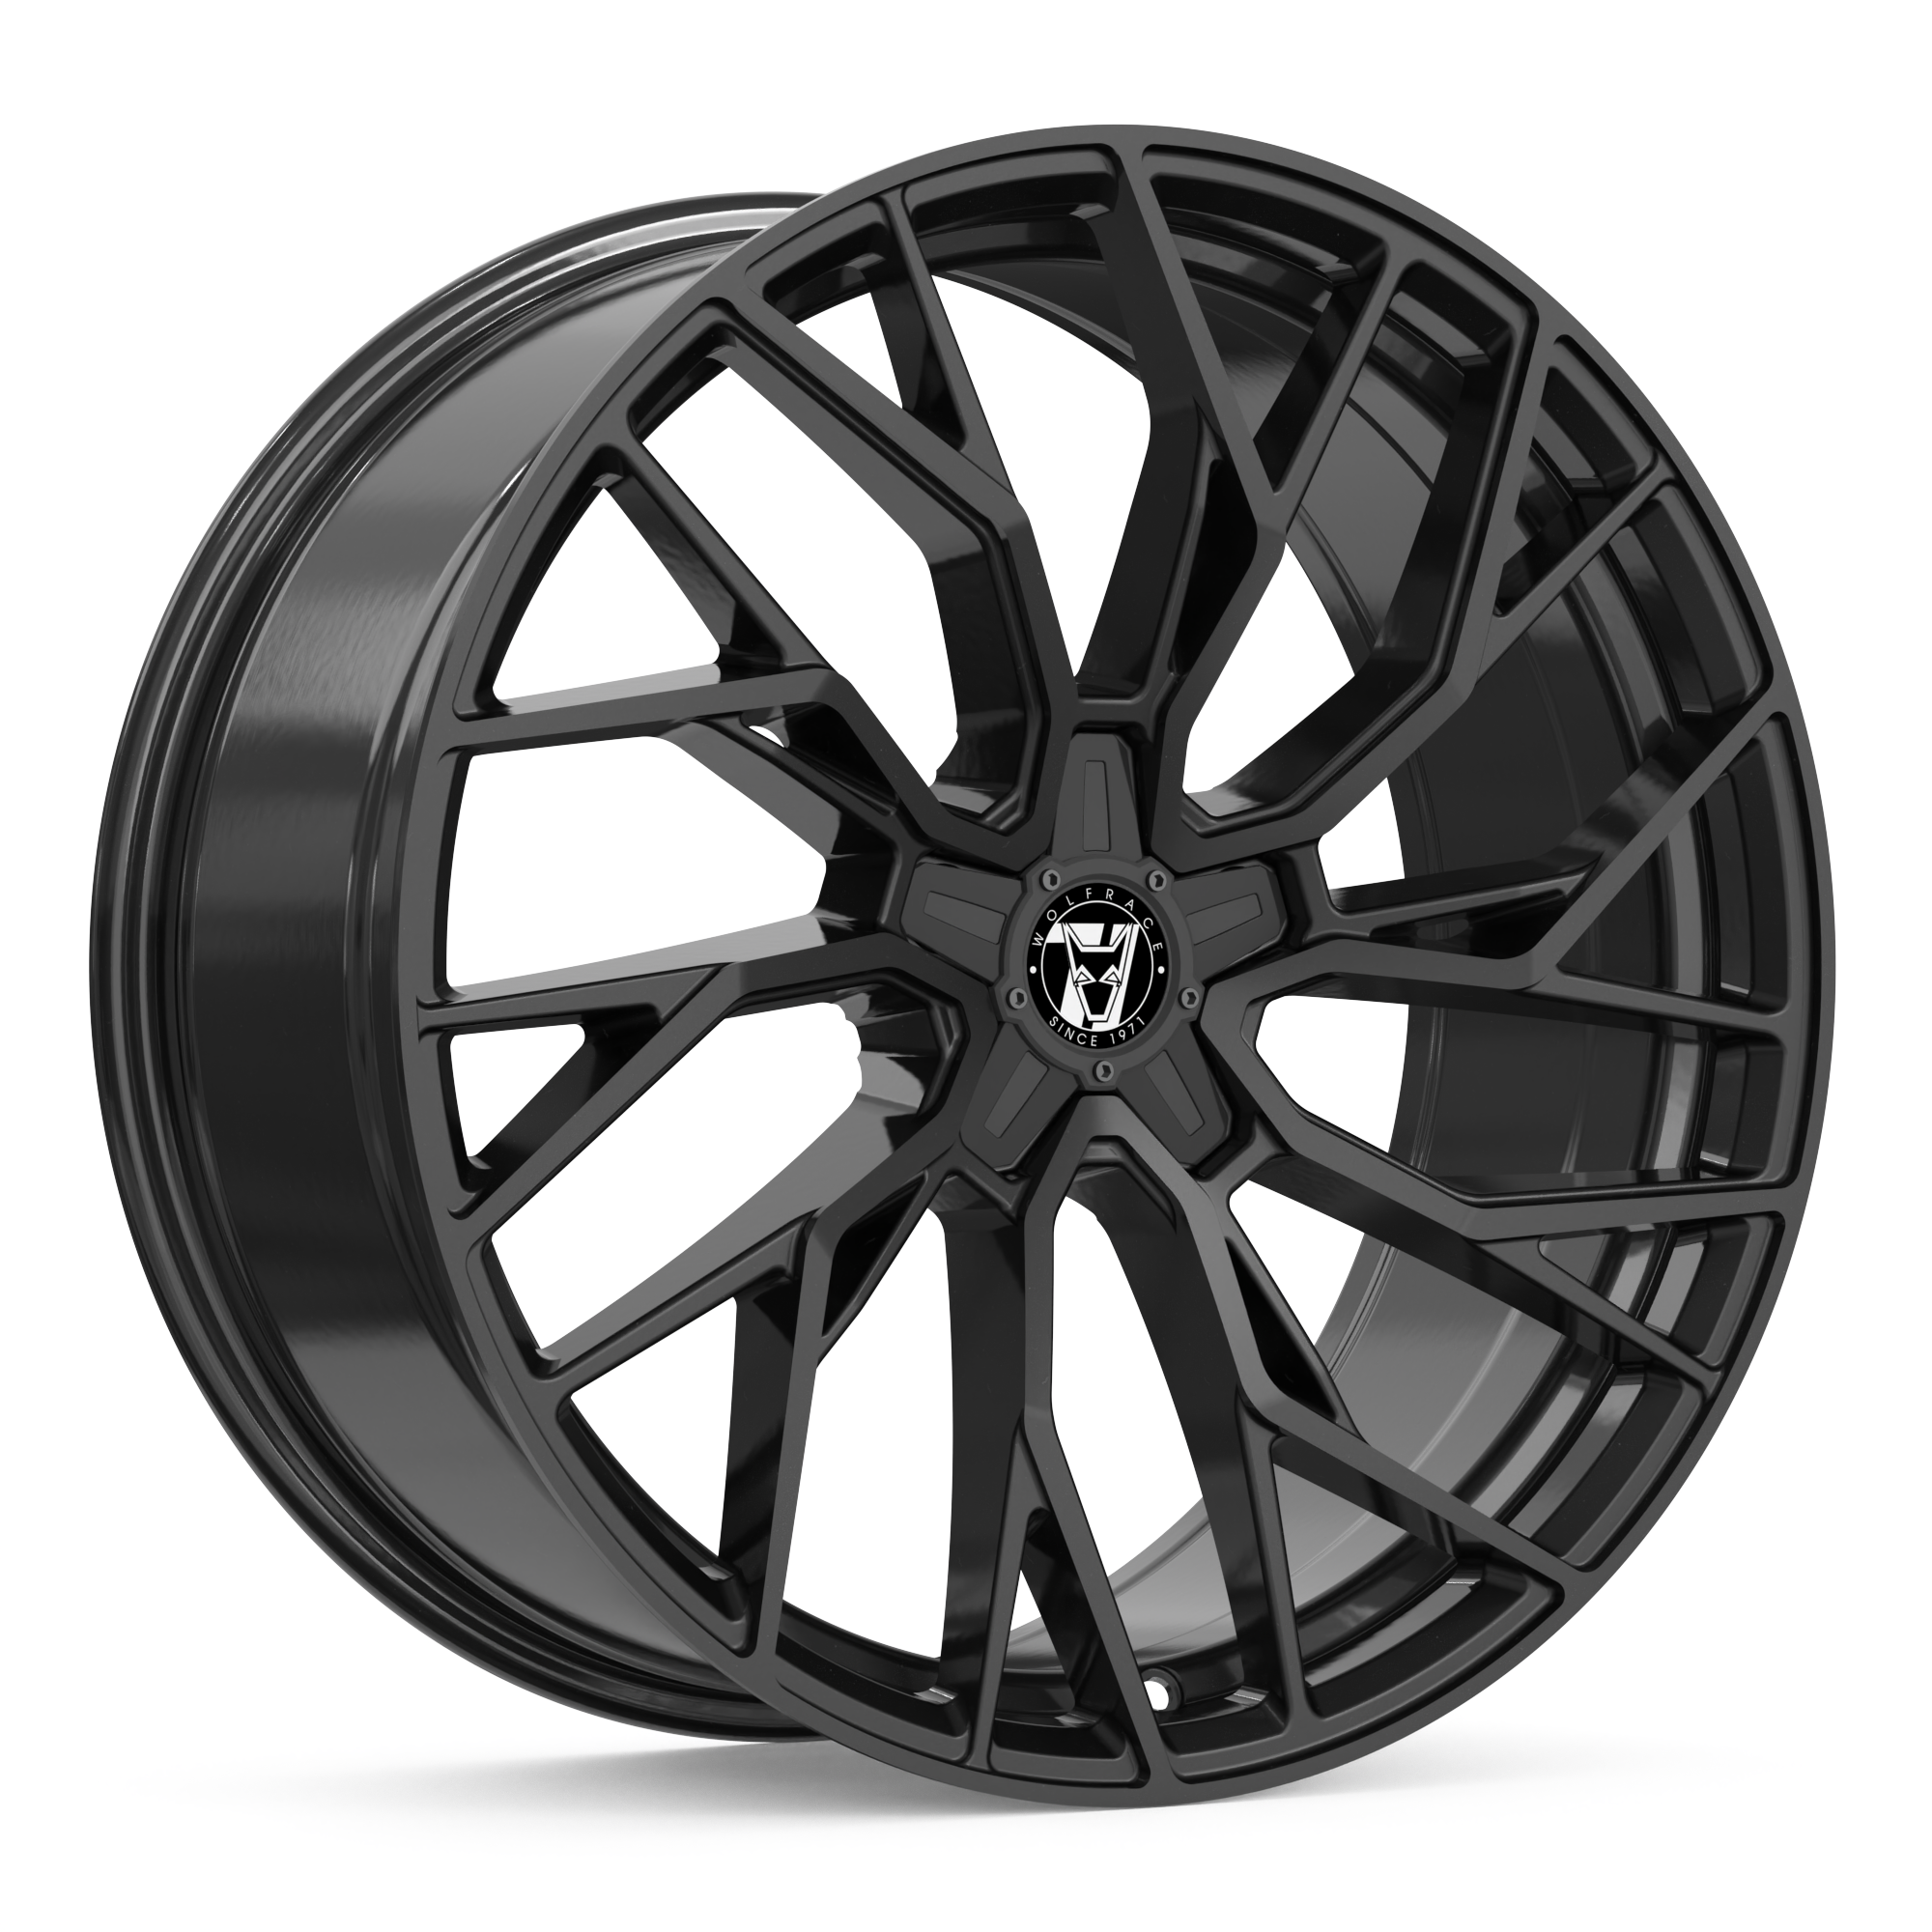 Demon Wheels 71 Voodoo Black Edition [9.5x22] -5x120- ET 45